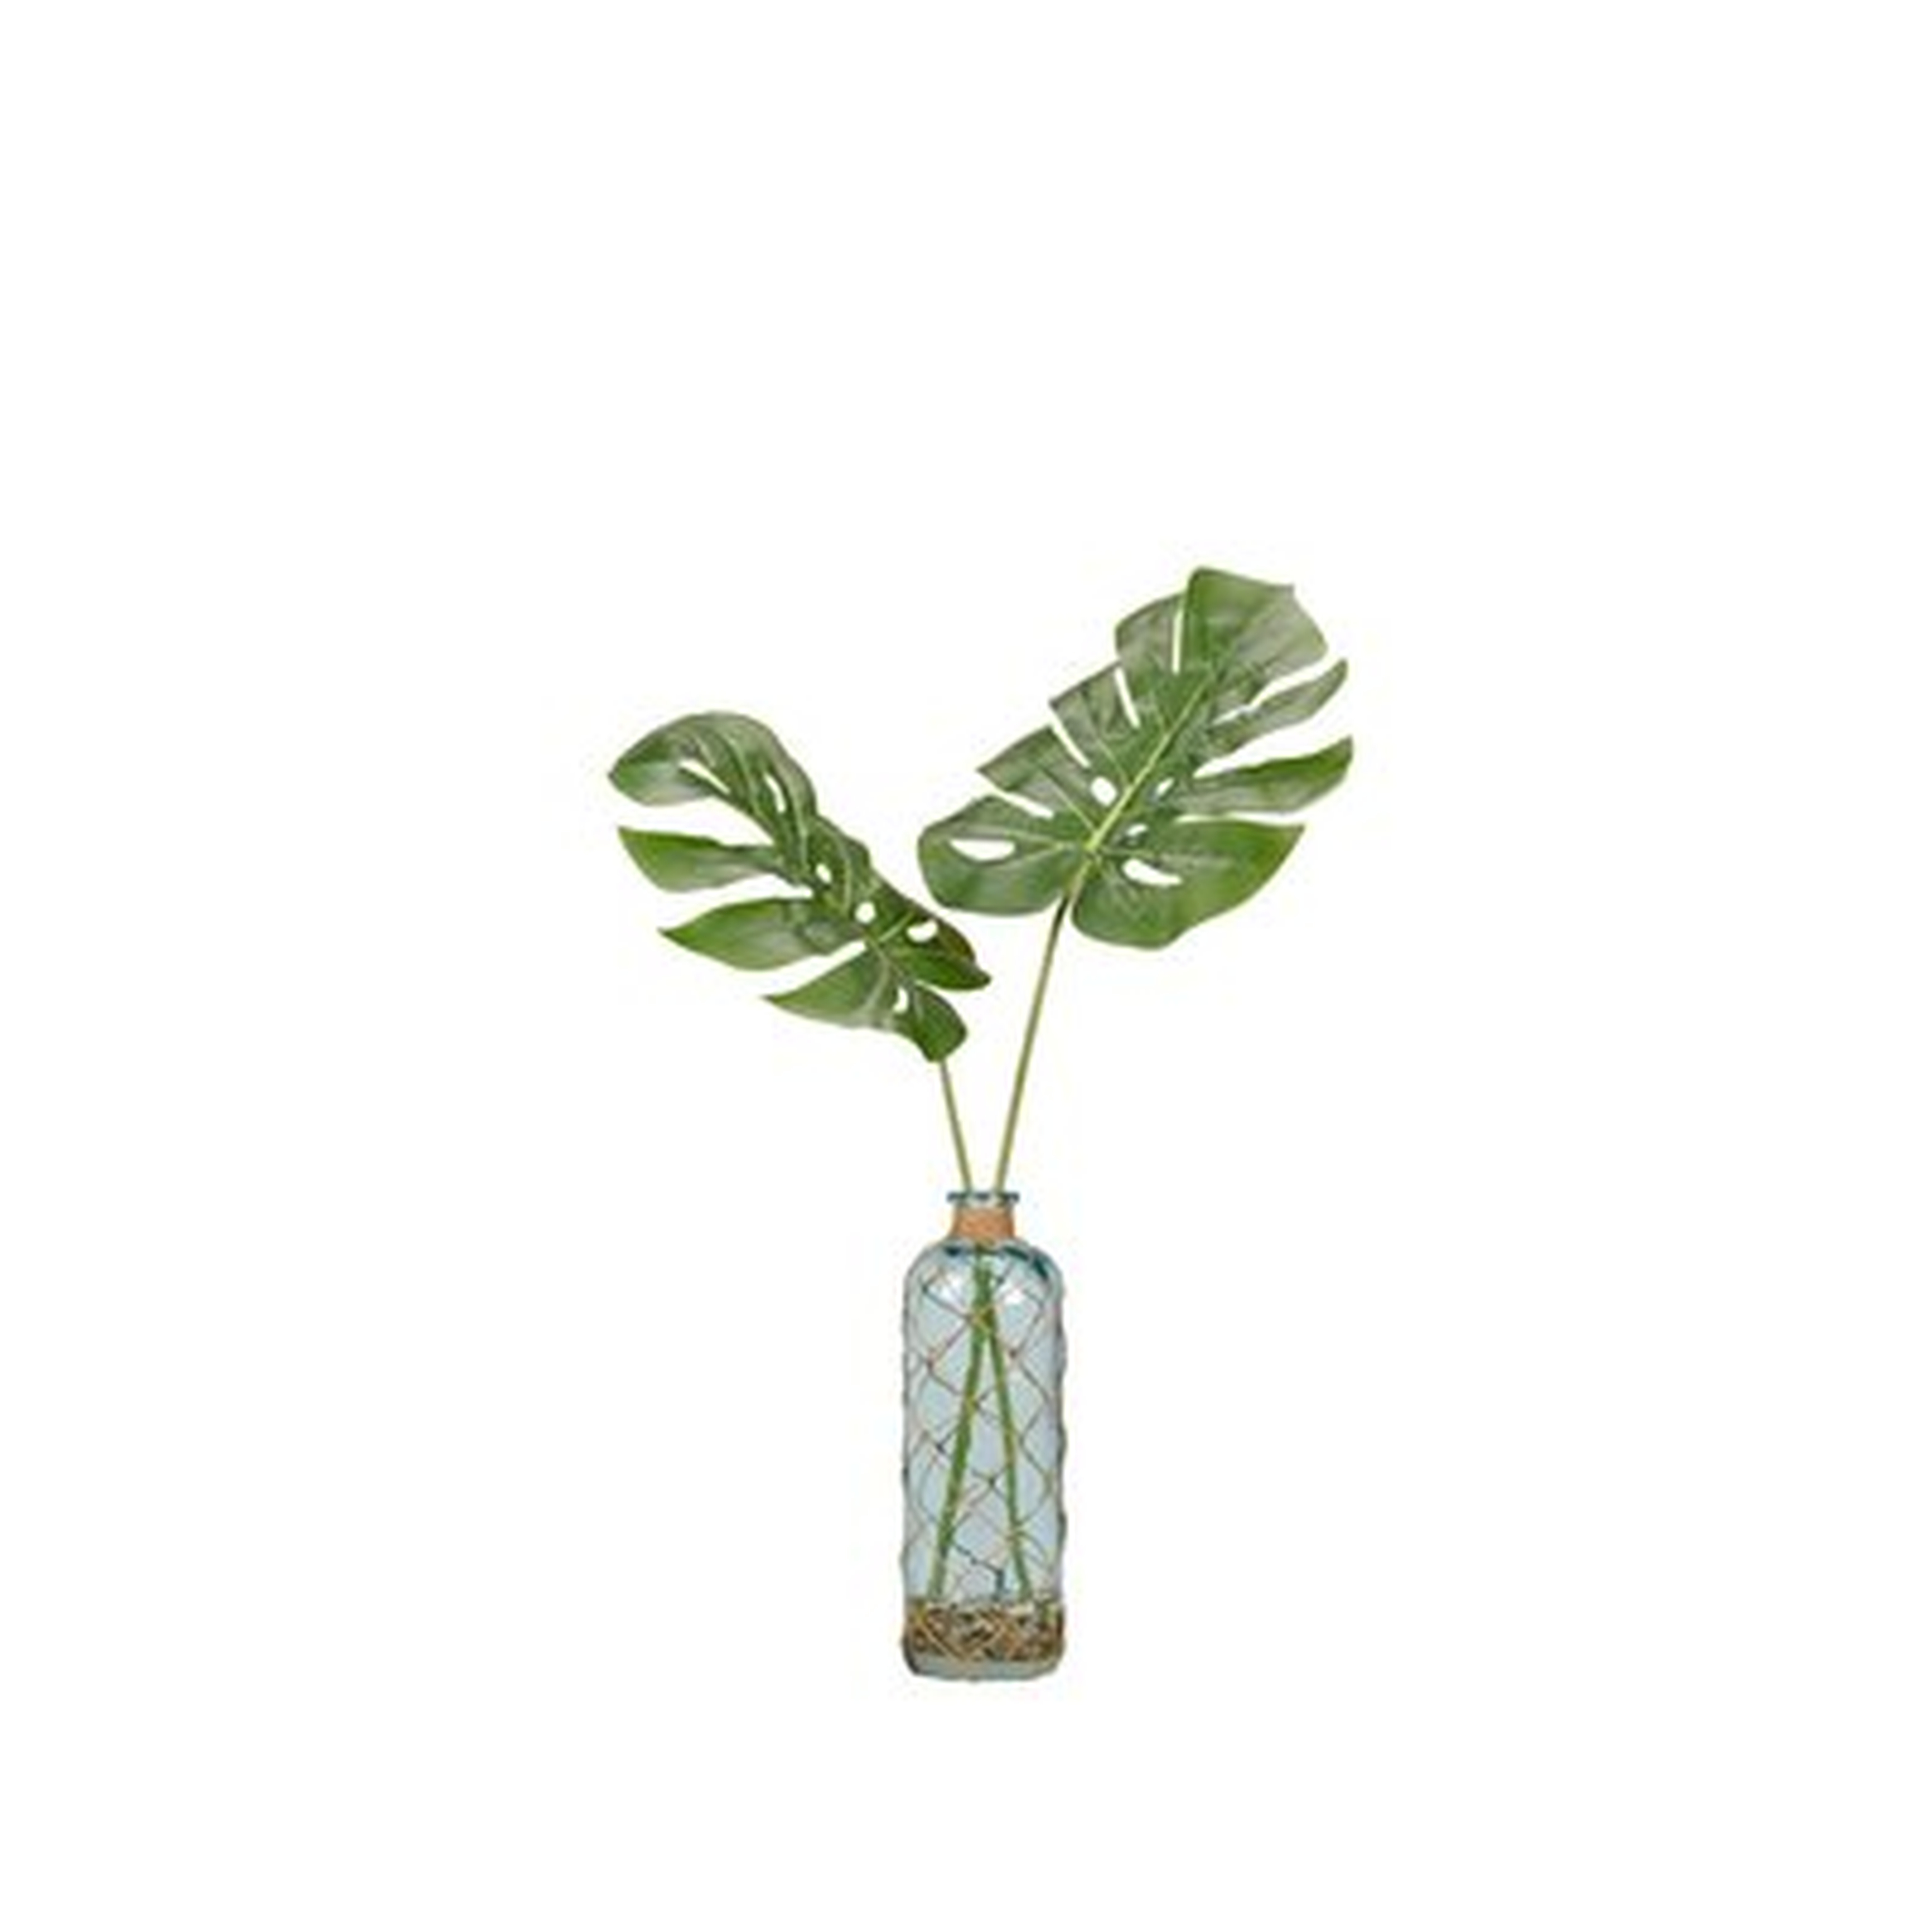 Spilt Leaf Philo Plant in Decorative Vase - Wayfair